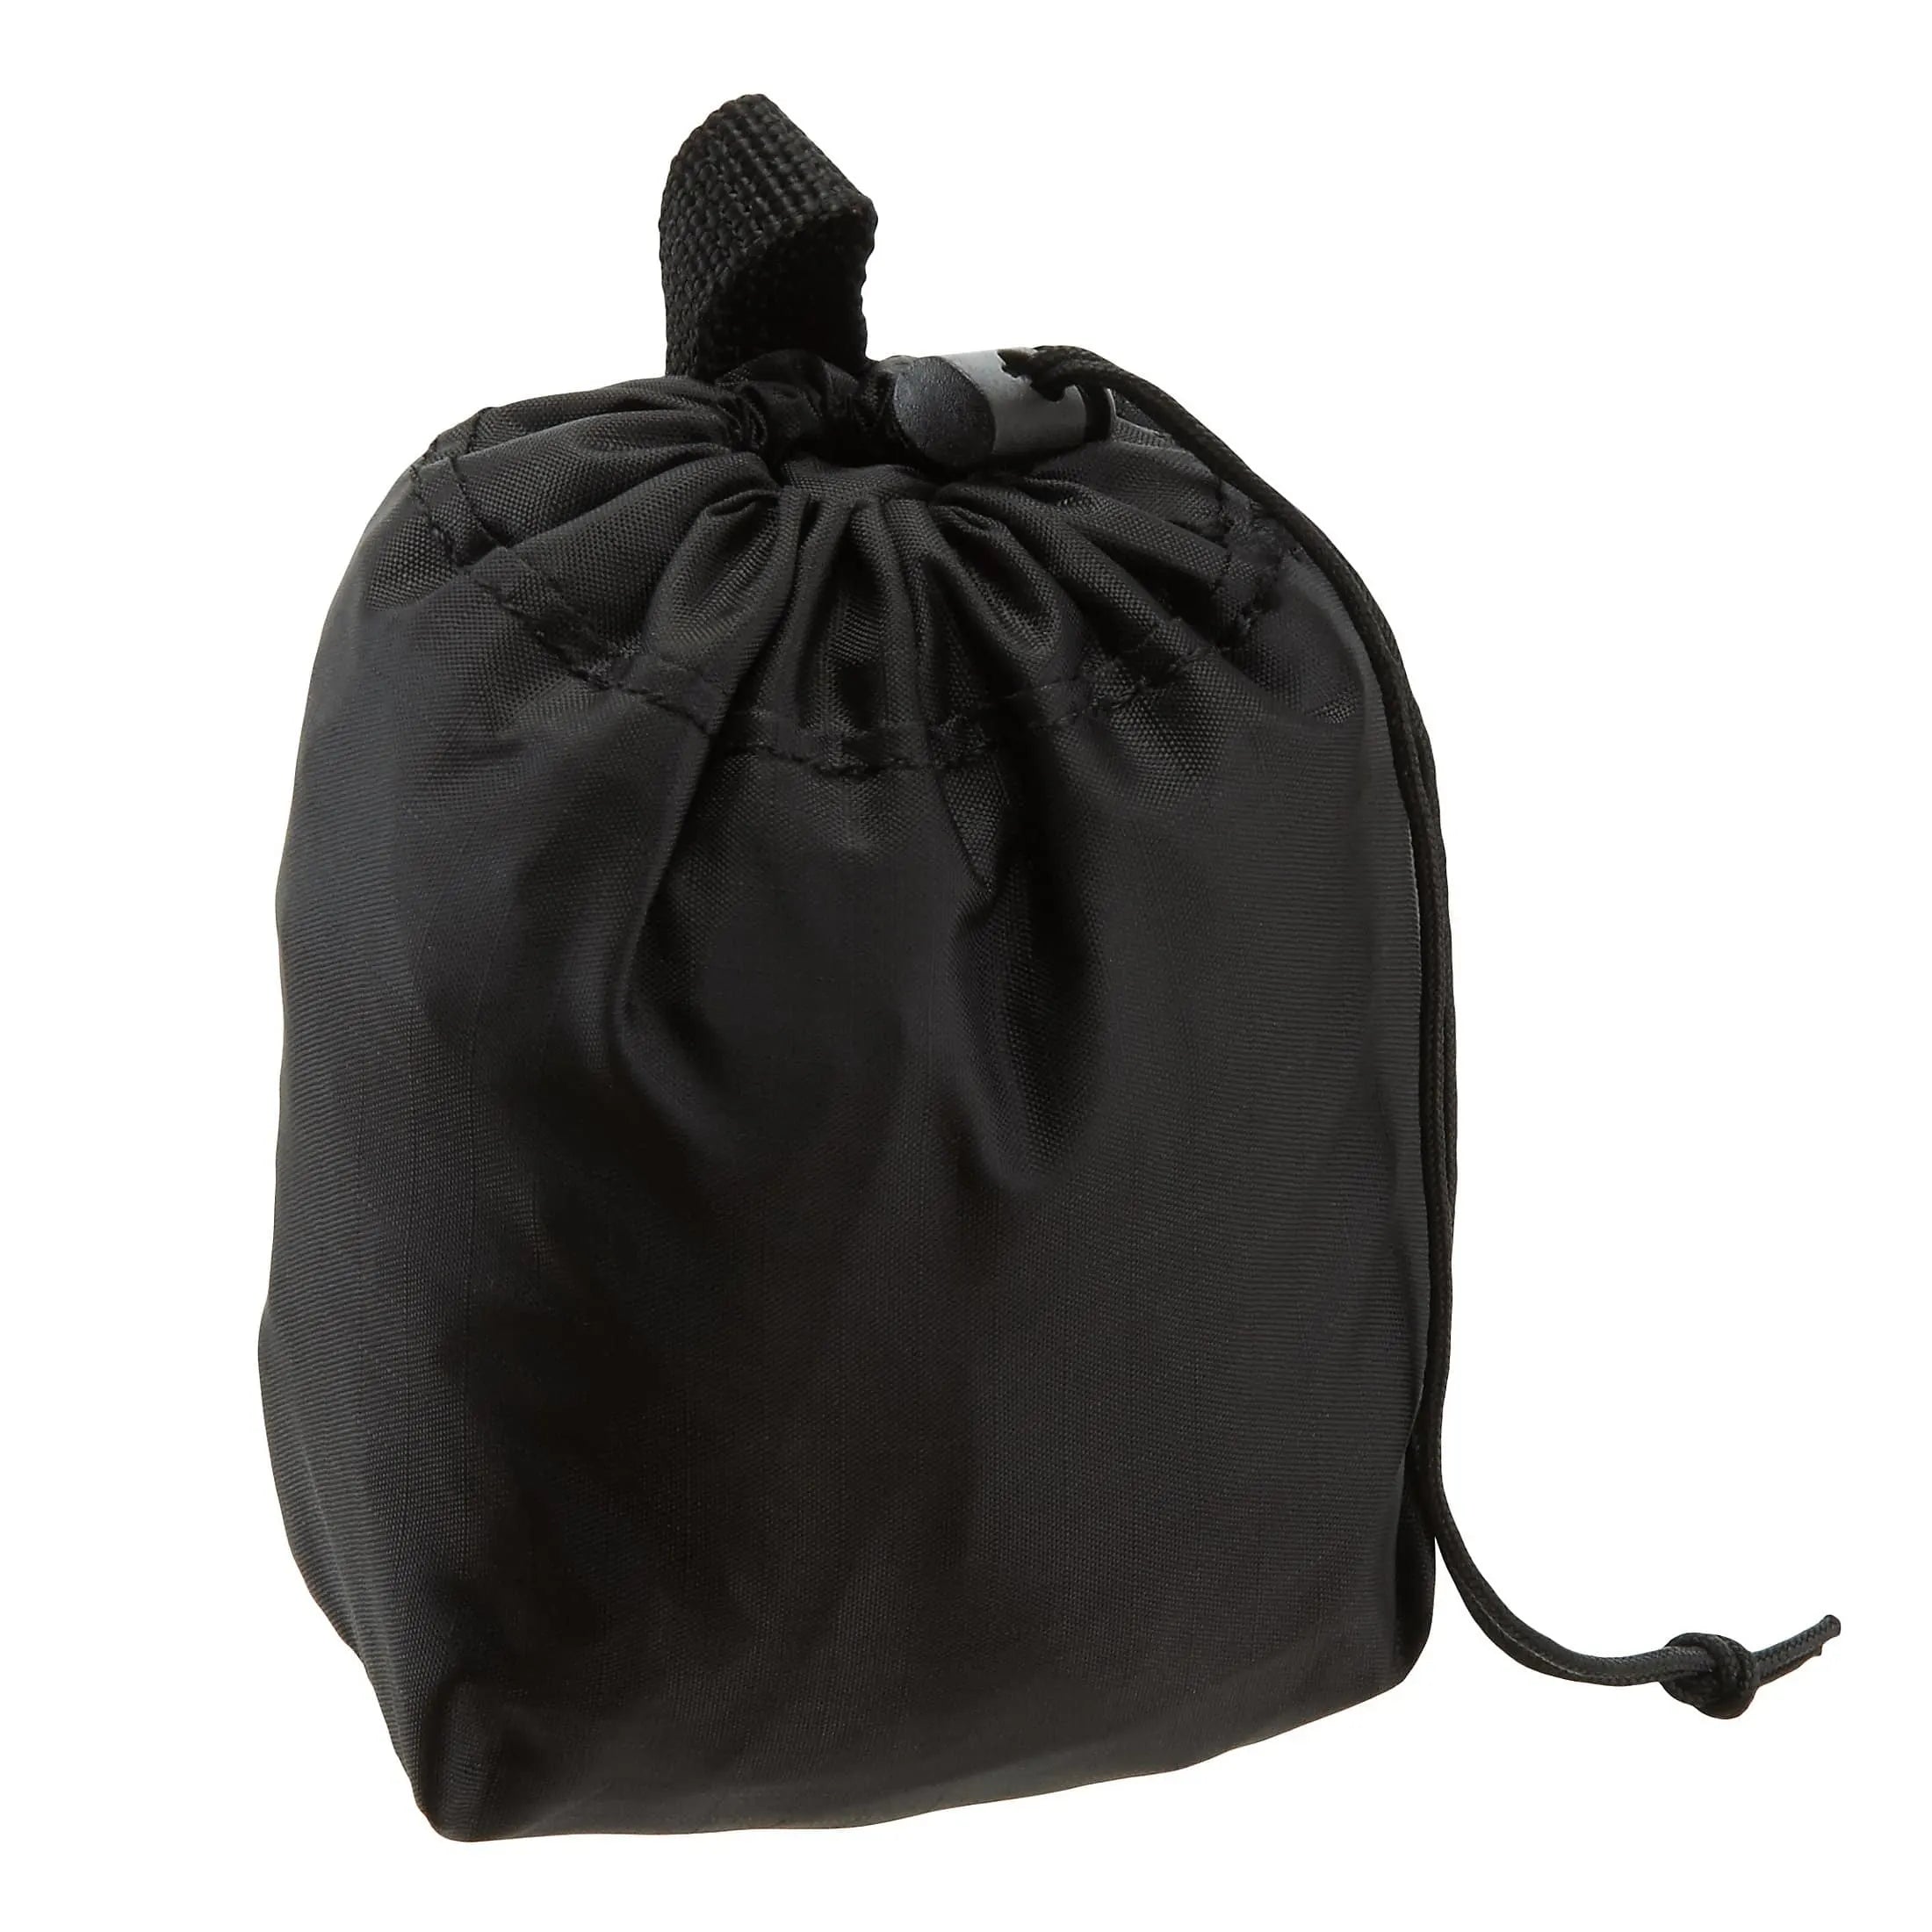 Victorinox Altmont Active backpack rain cover 65 cm - black